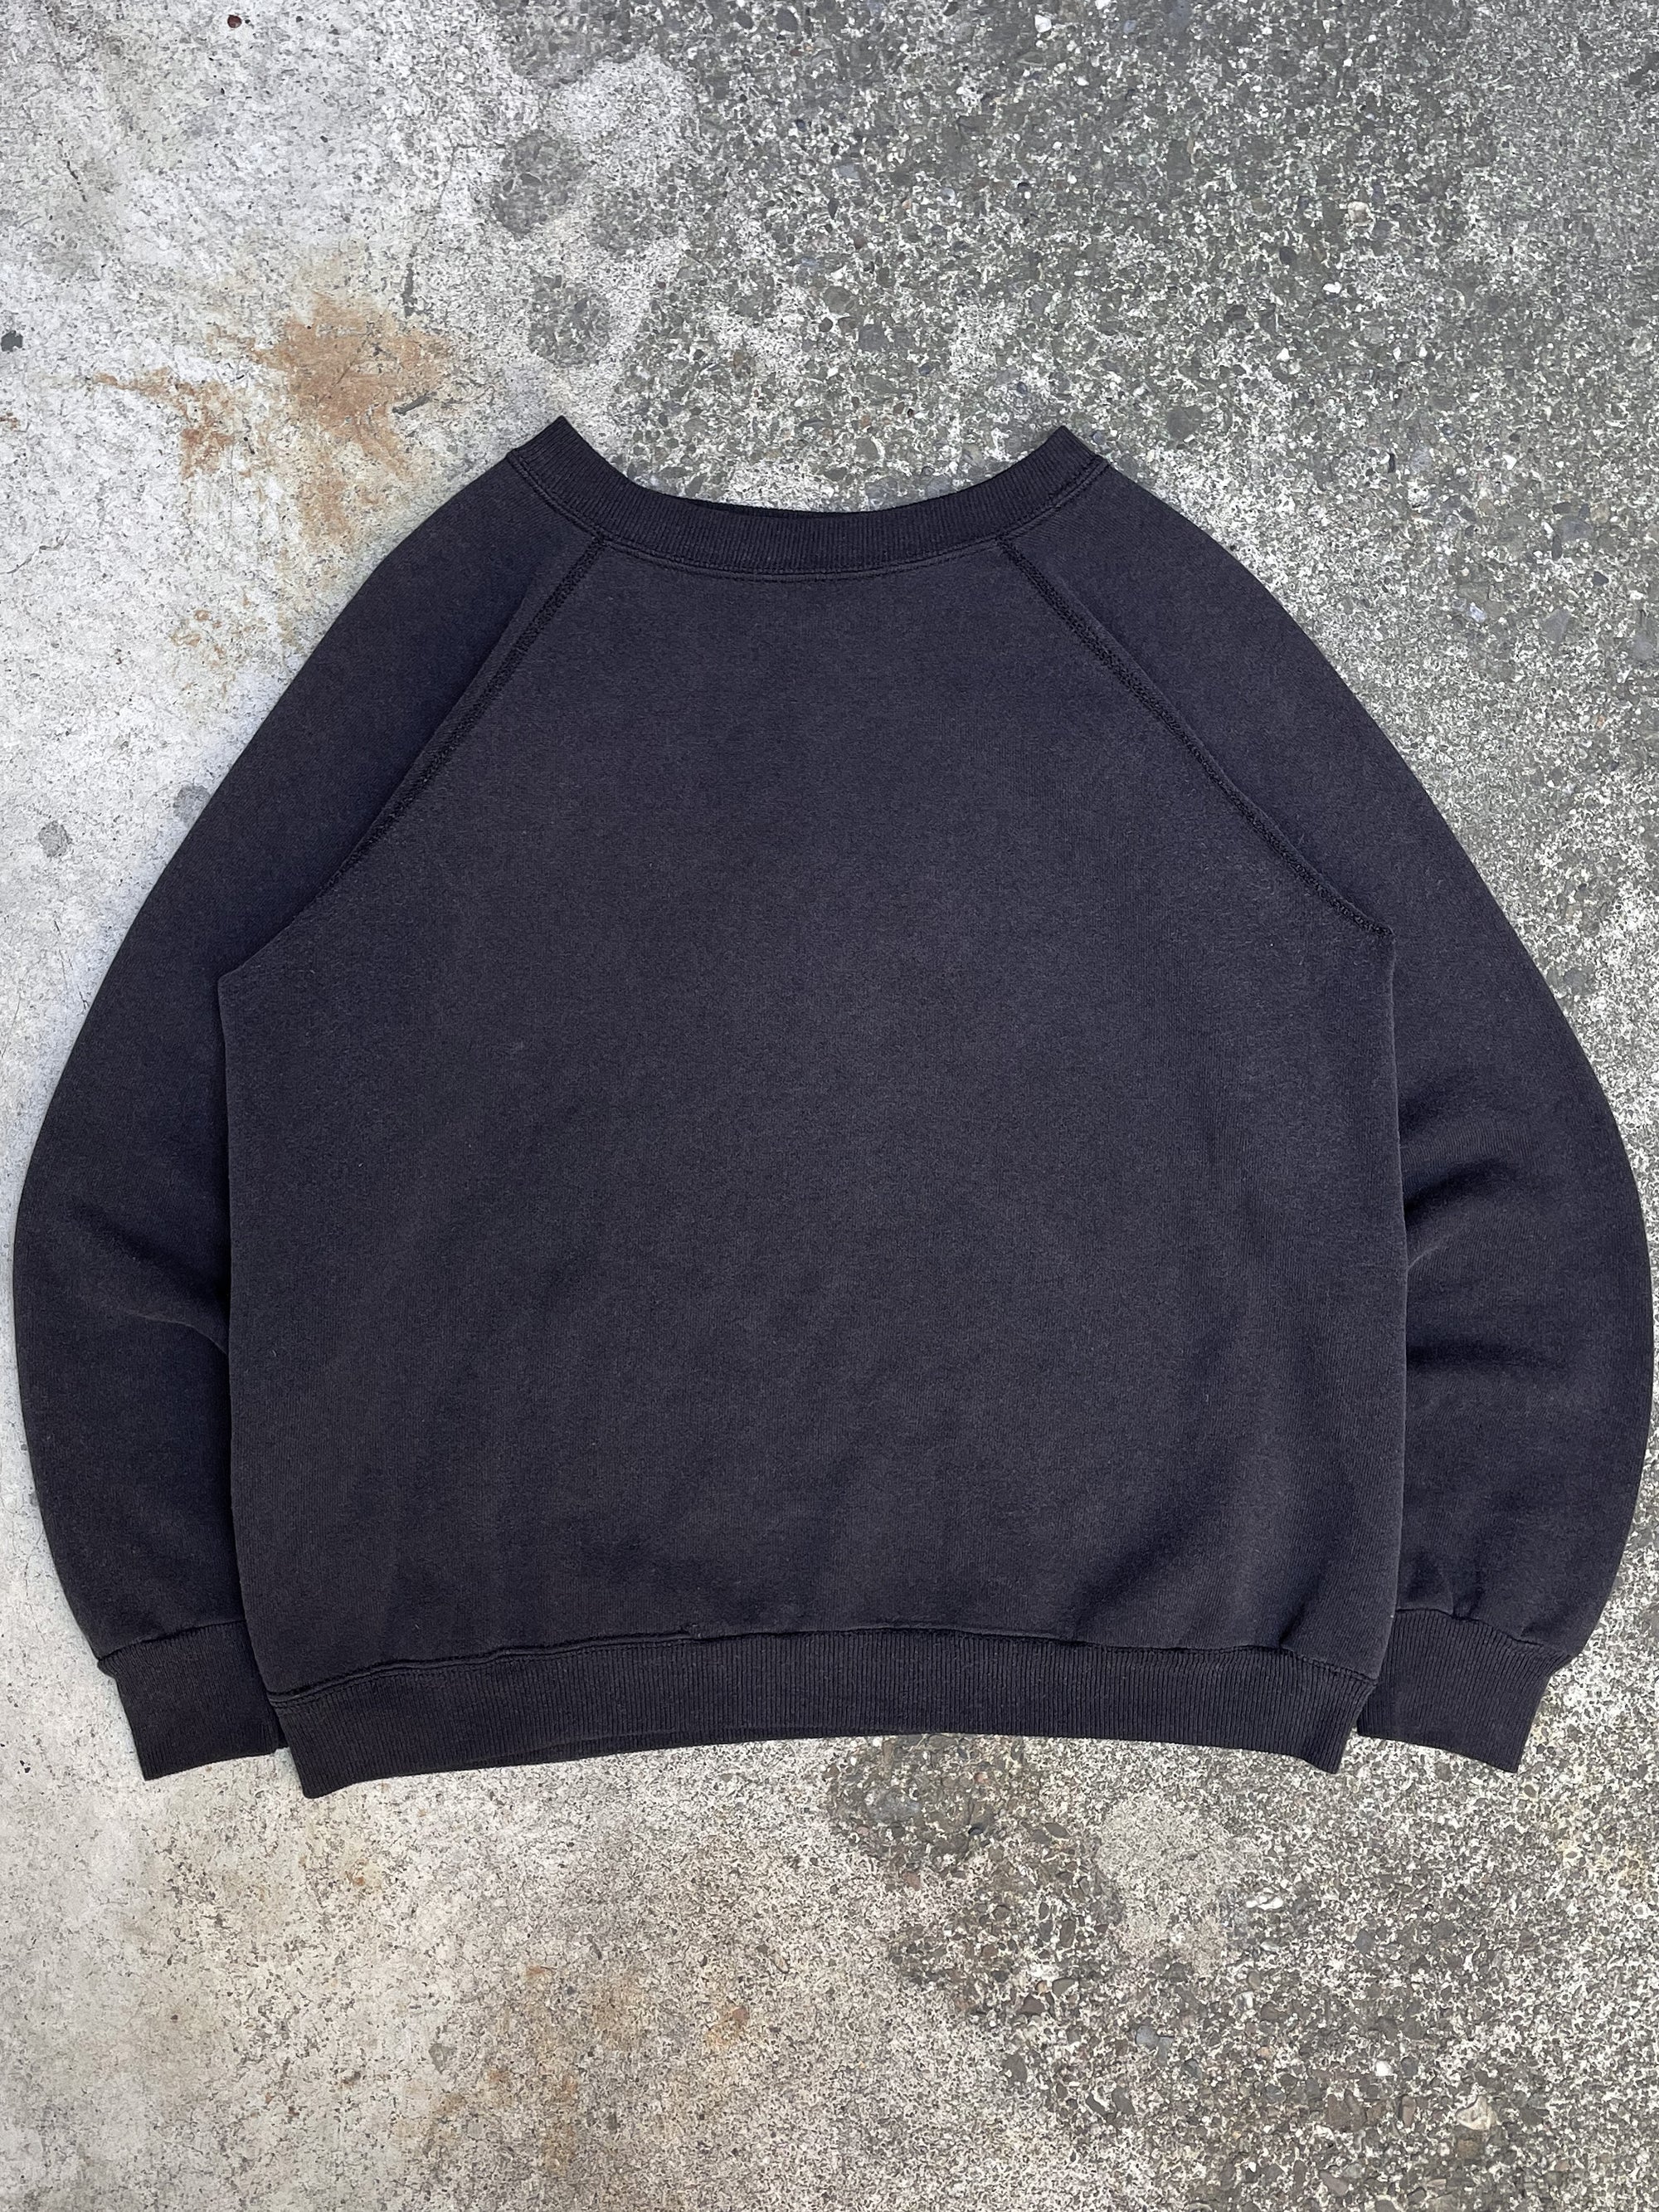 1990s Faded Black Raglan Sweatshirt (M)